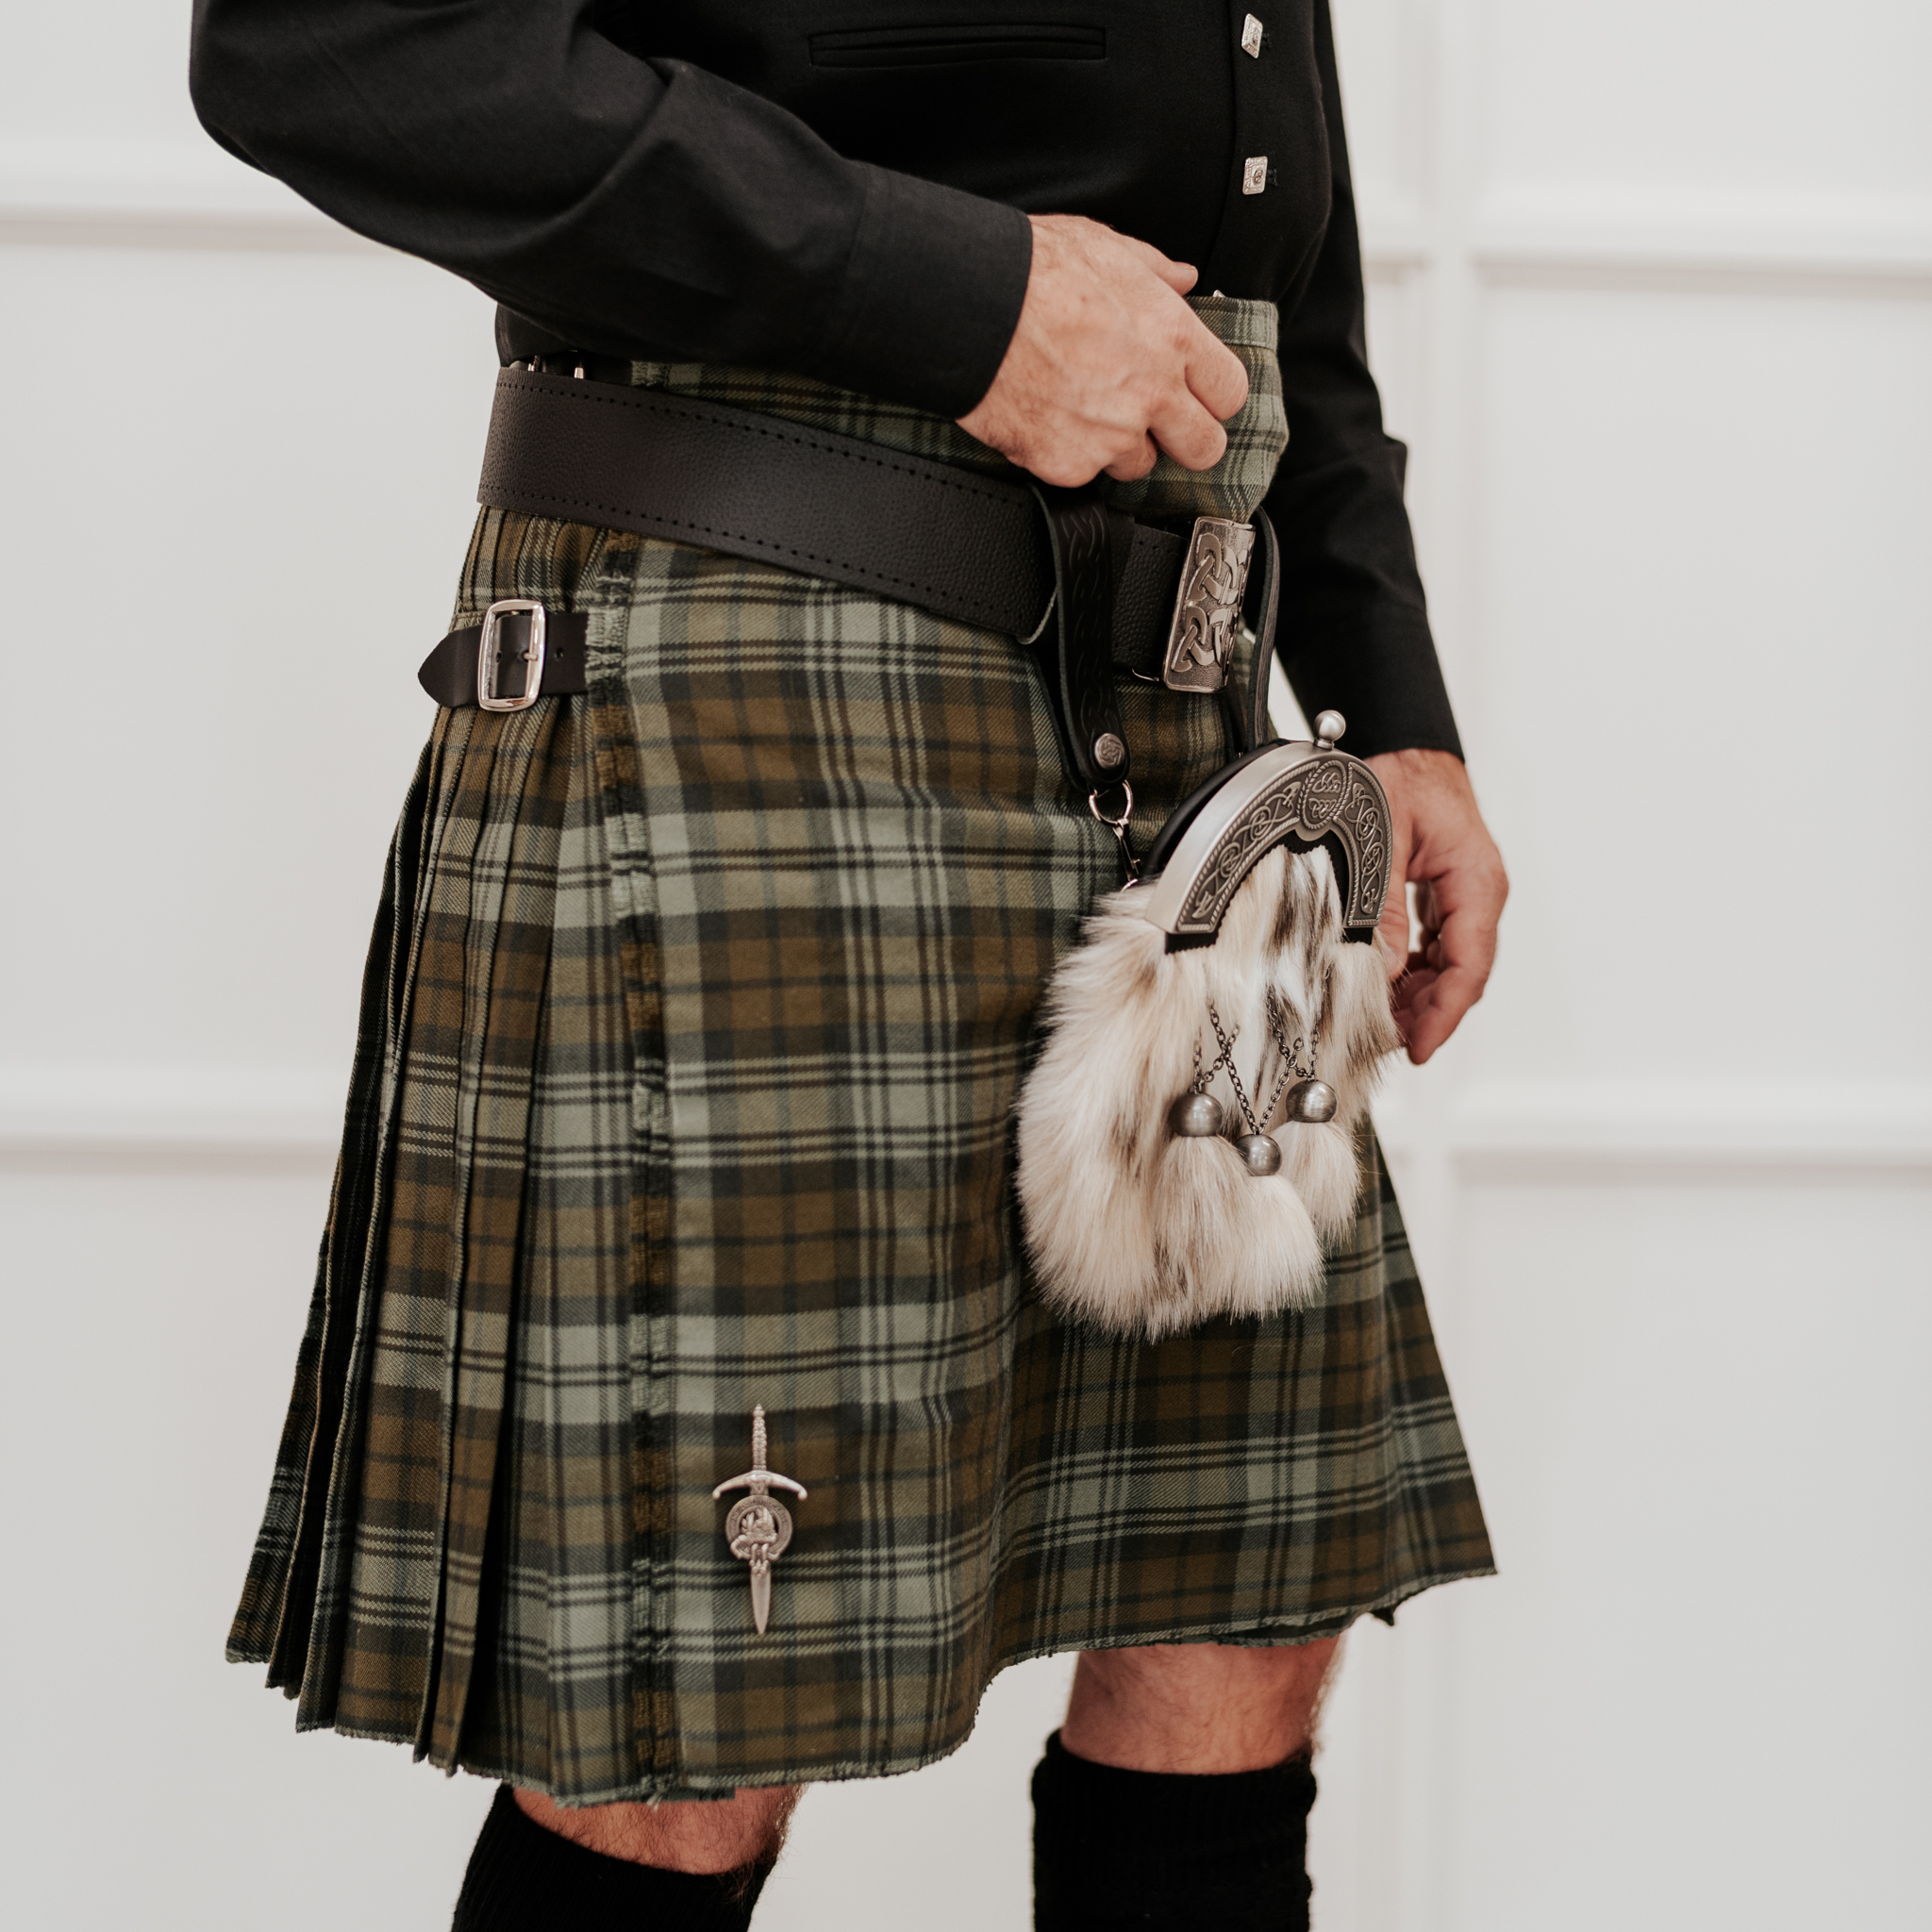 How To Wear: A Sporran | ScotlandShop